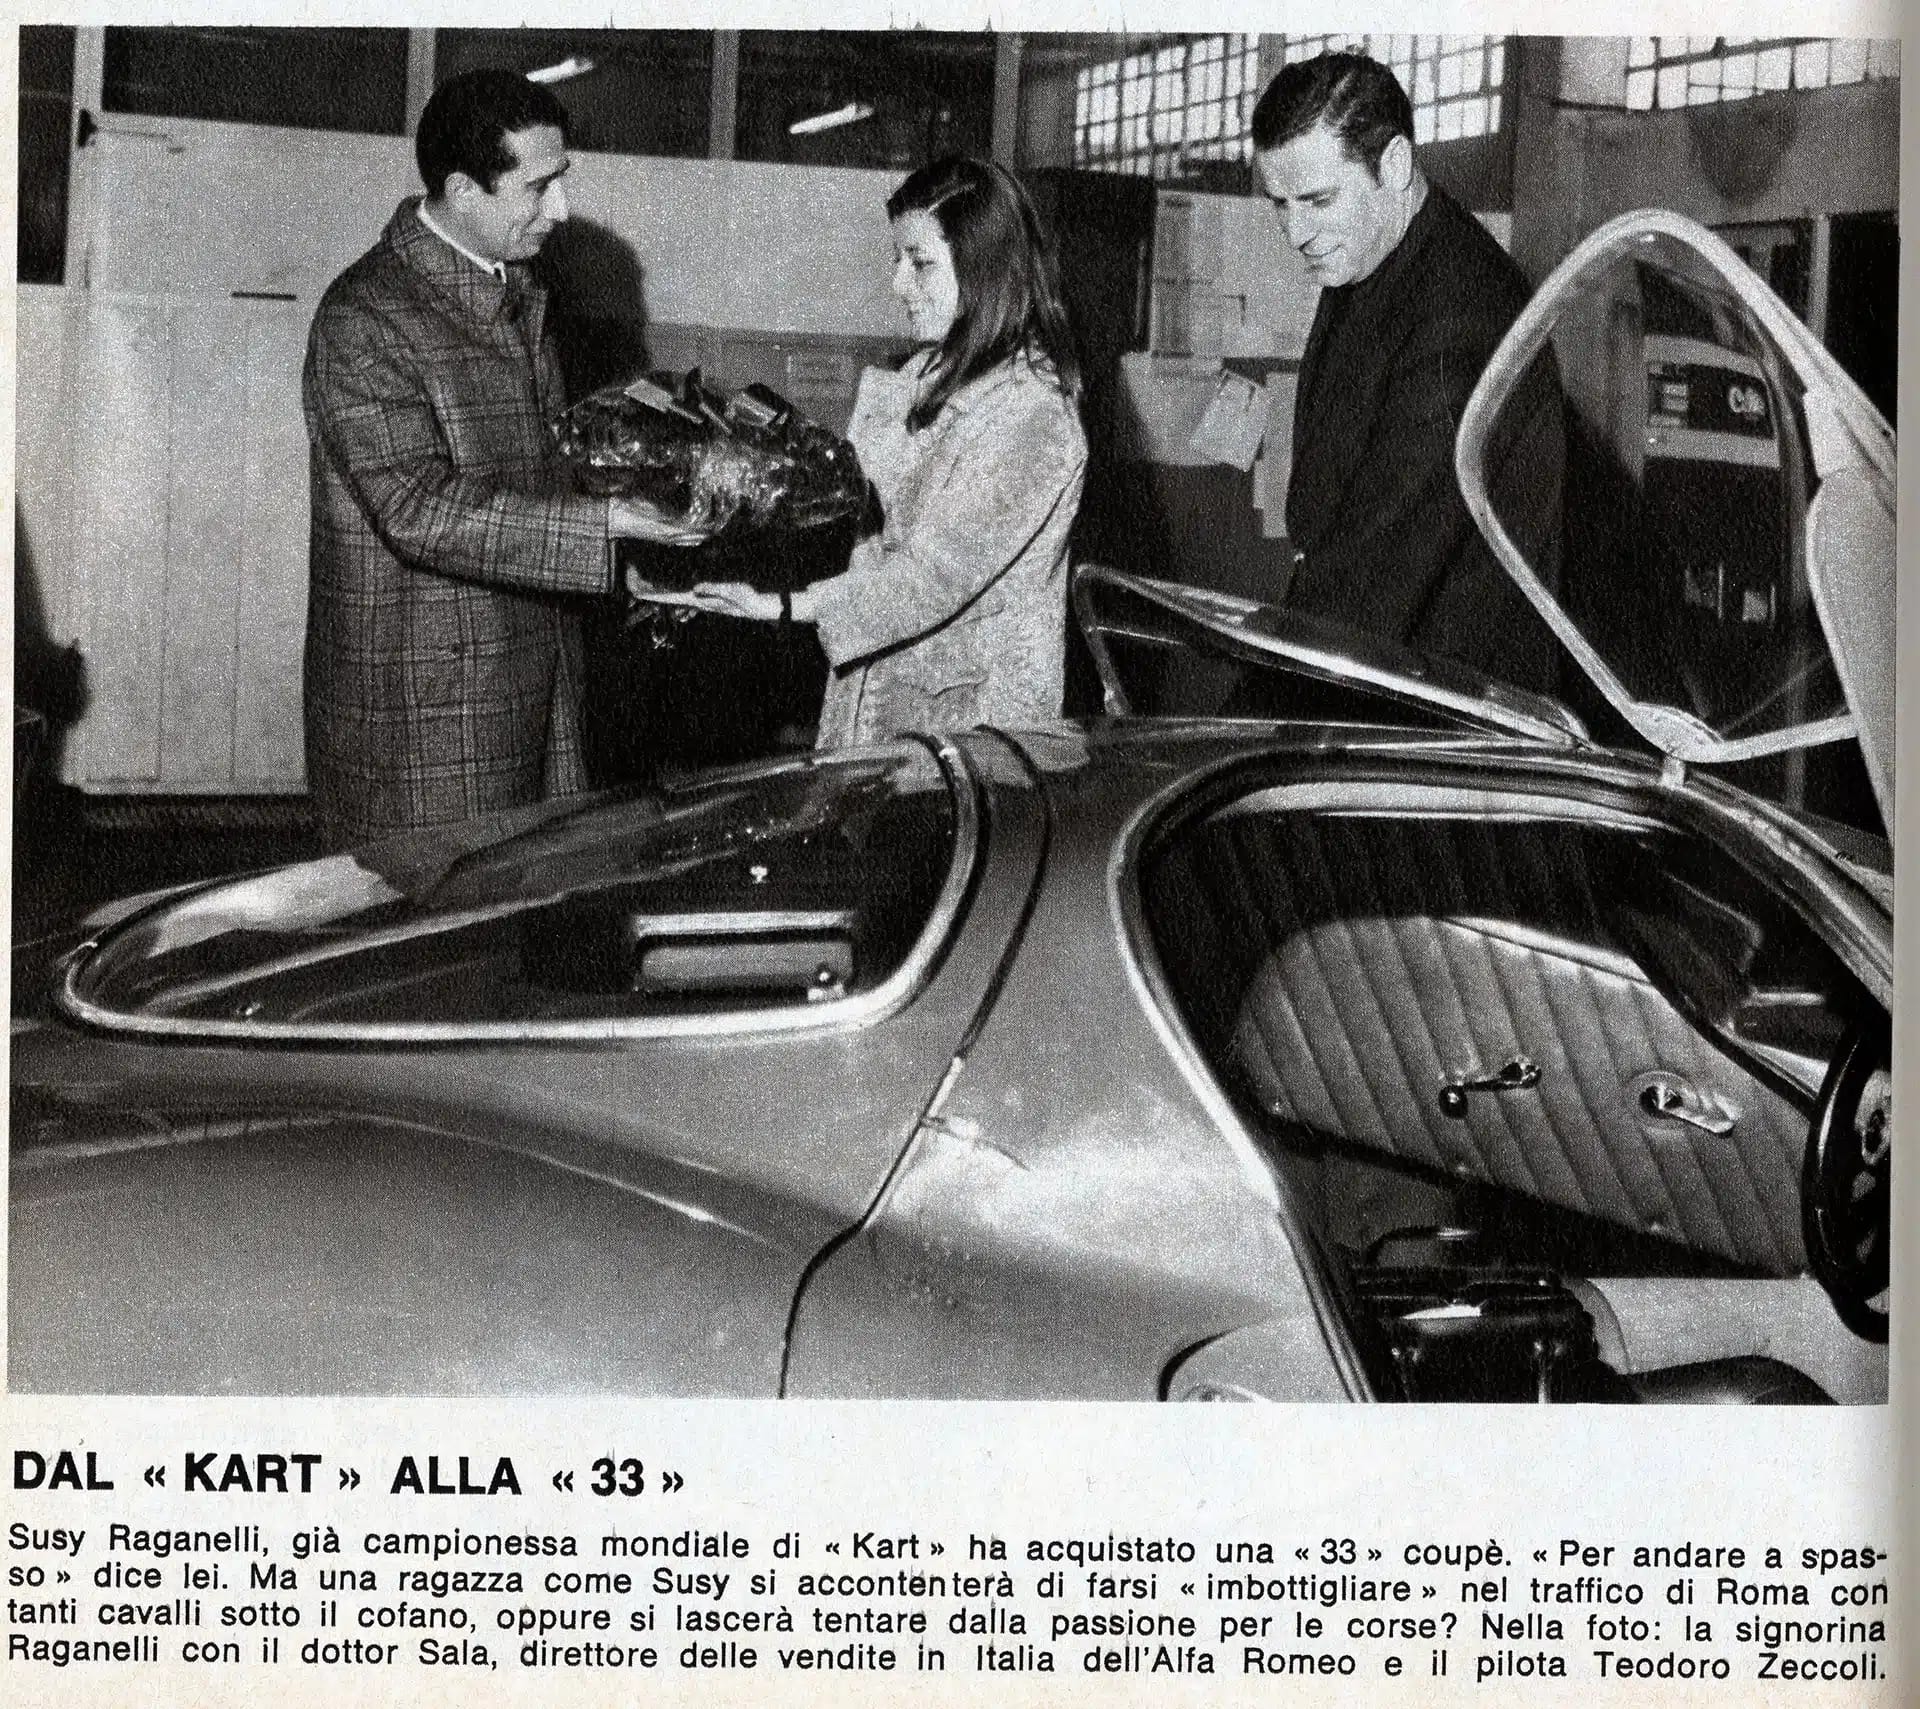  Couvre Volant Voiture pour Alfa Romeo 33/33 Stradale